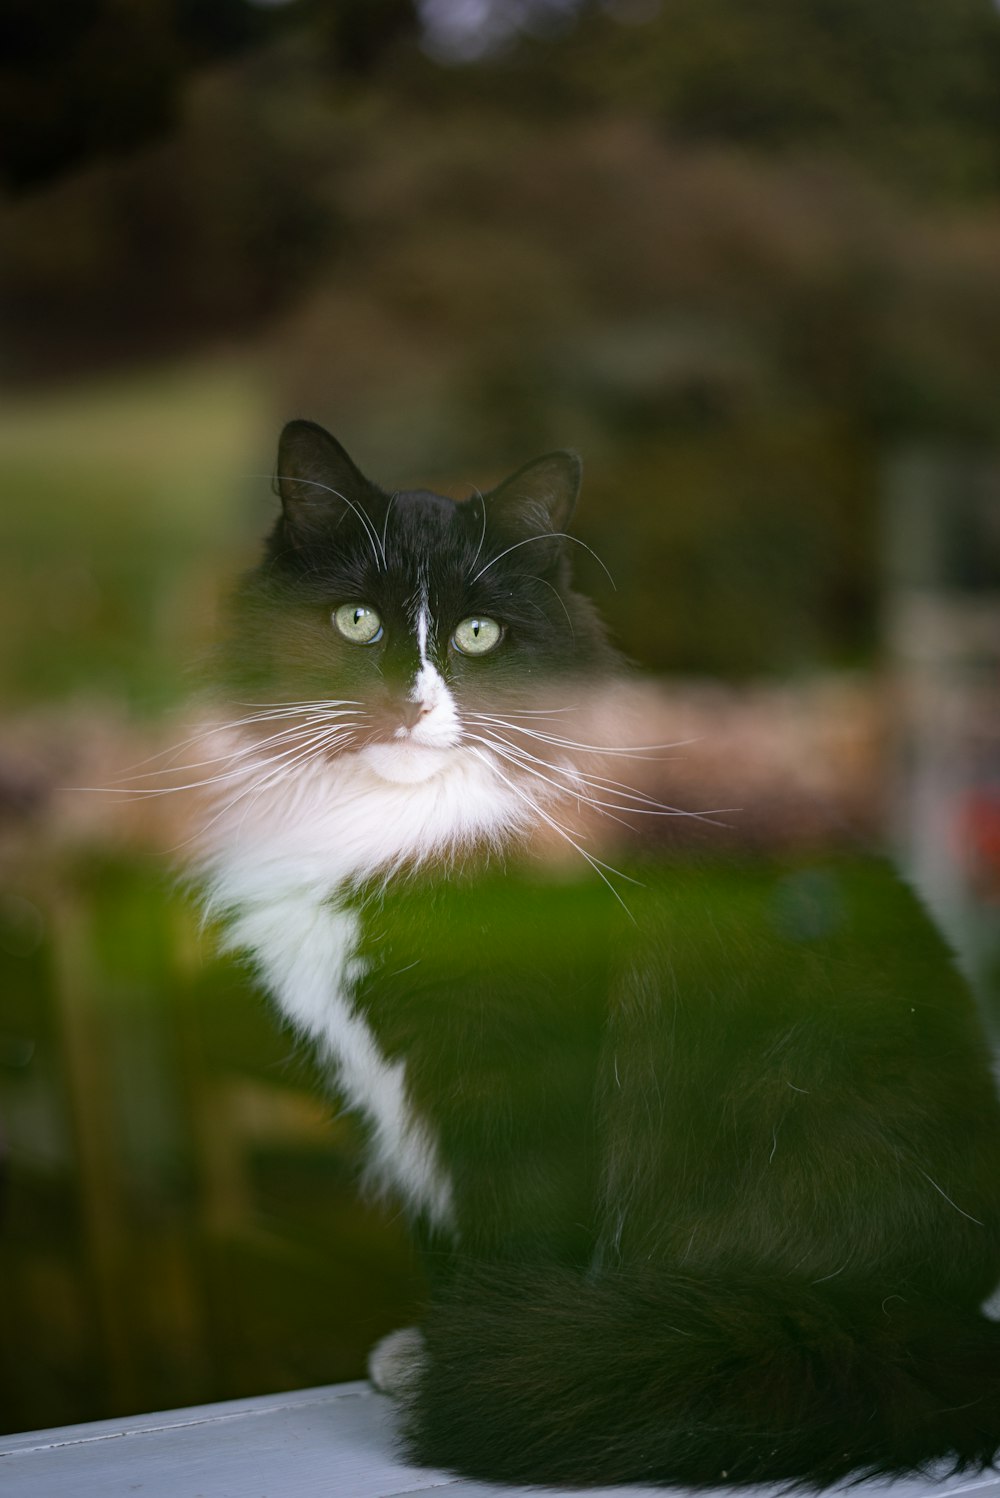 a cat sitting in a grassy area